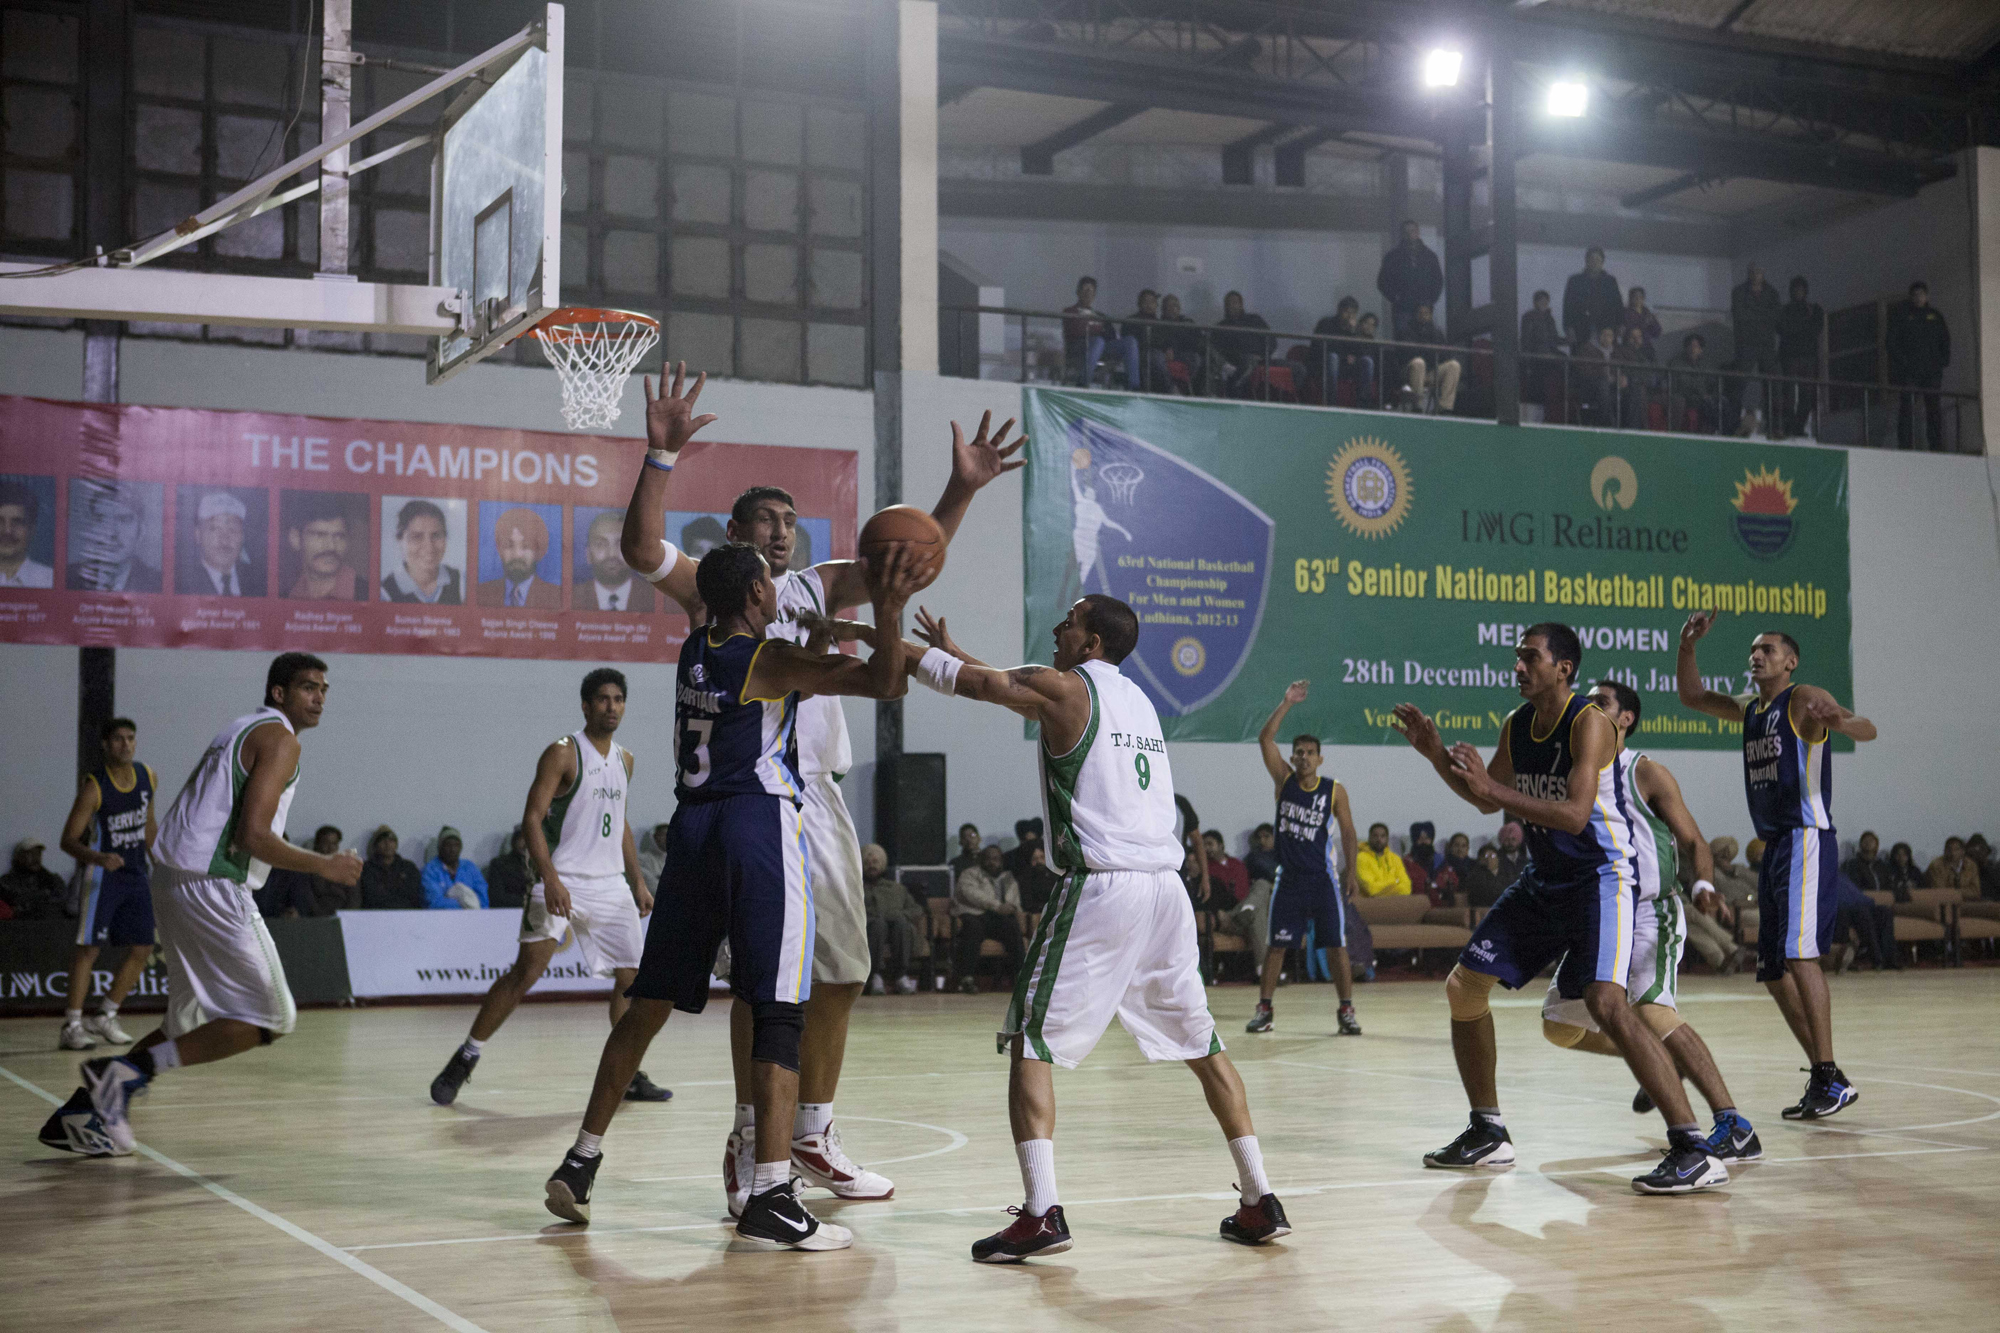 Satnam Singh defending the basket, Punjab team vs Services, 63rd Senior National Basketball Championship for Men and Women Ludhiana, 2012.